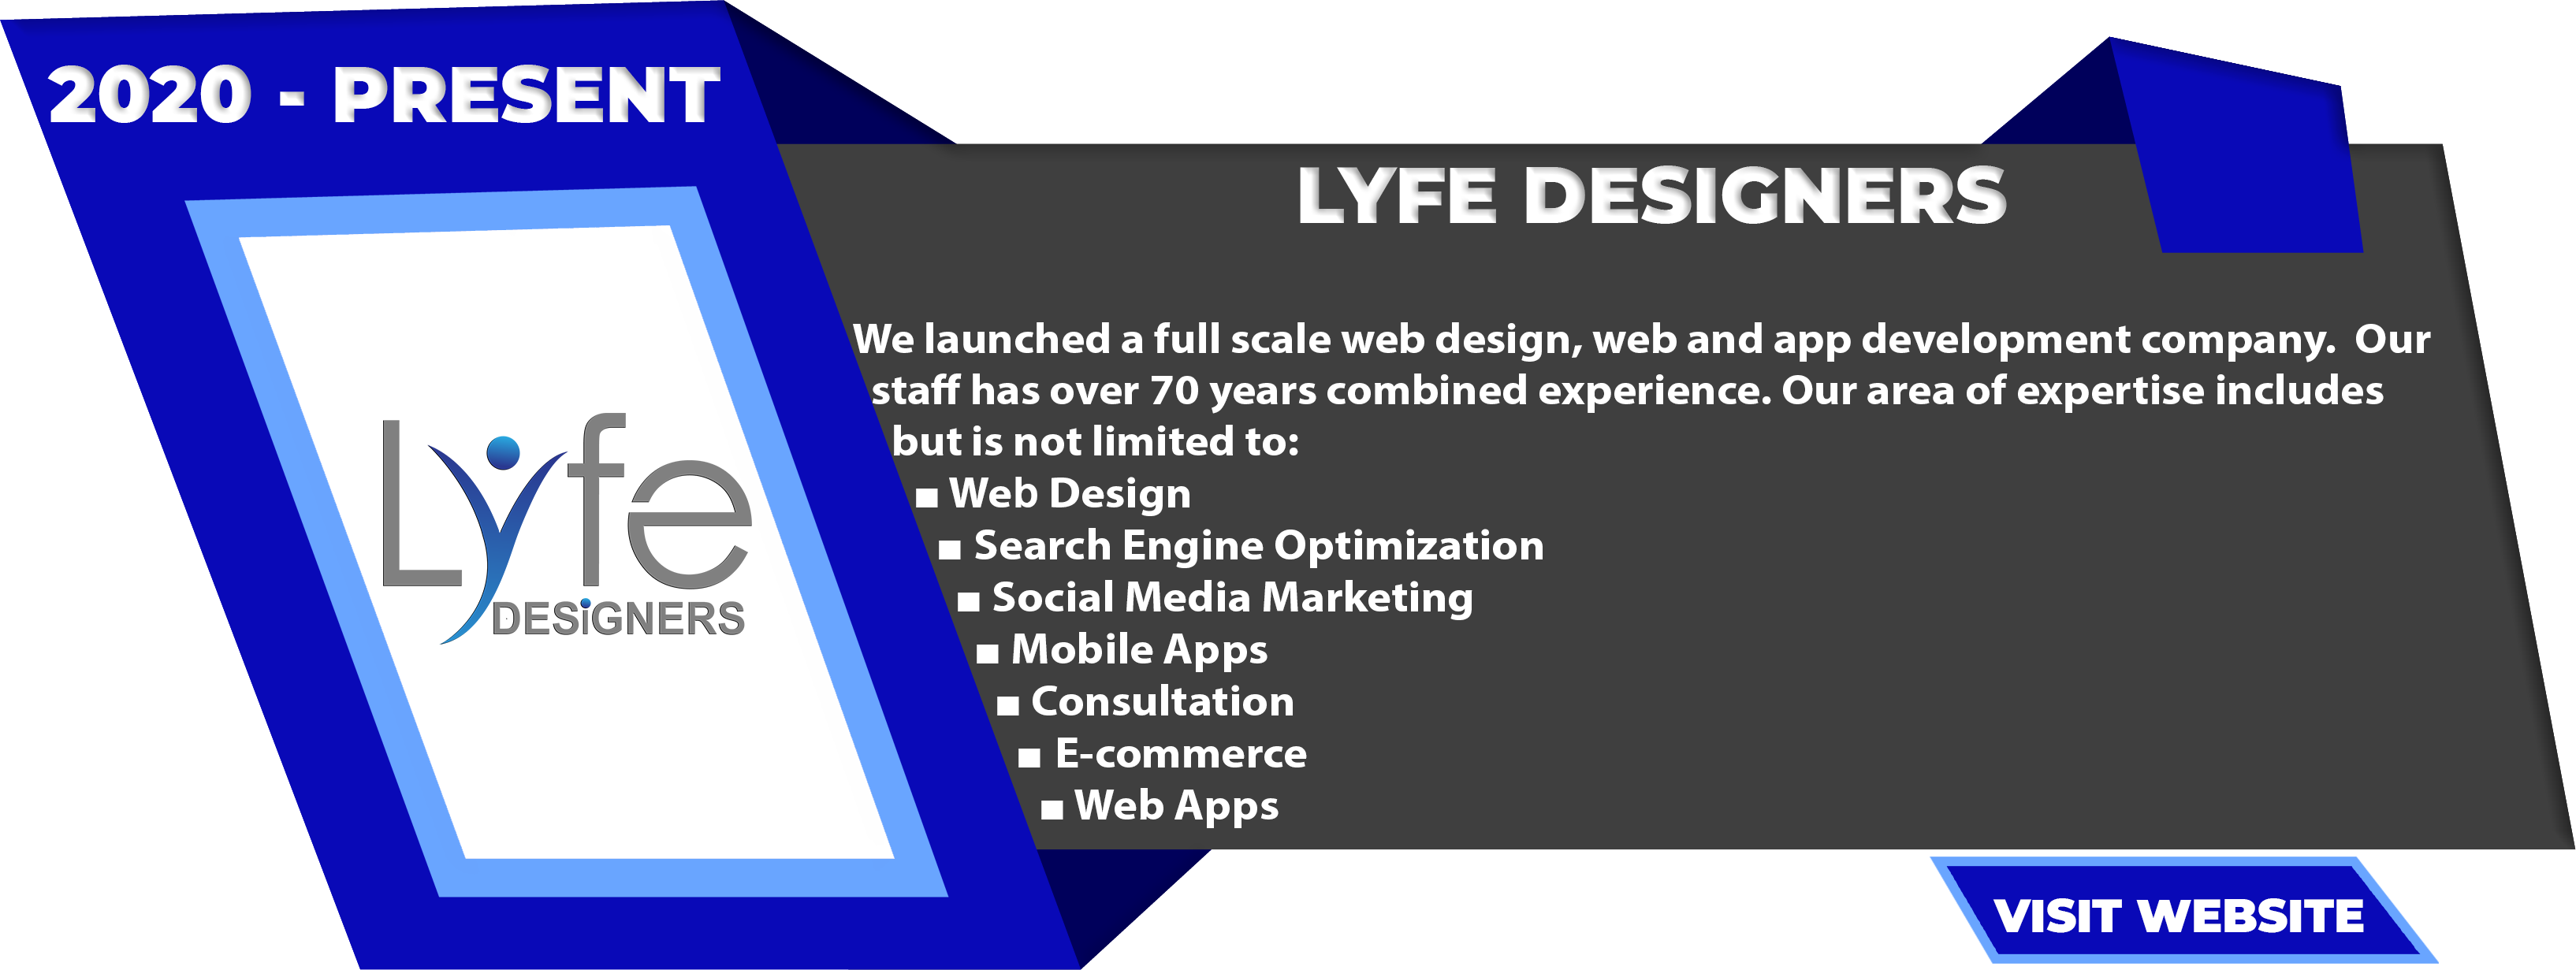 Lyfe-Designers-2020-2